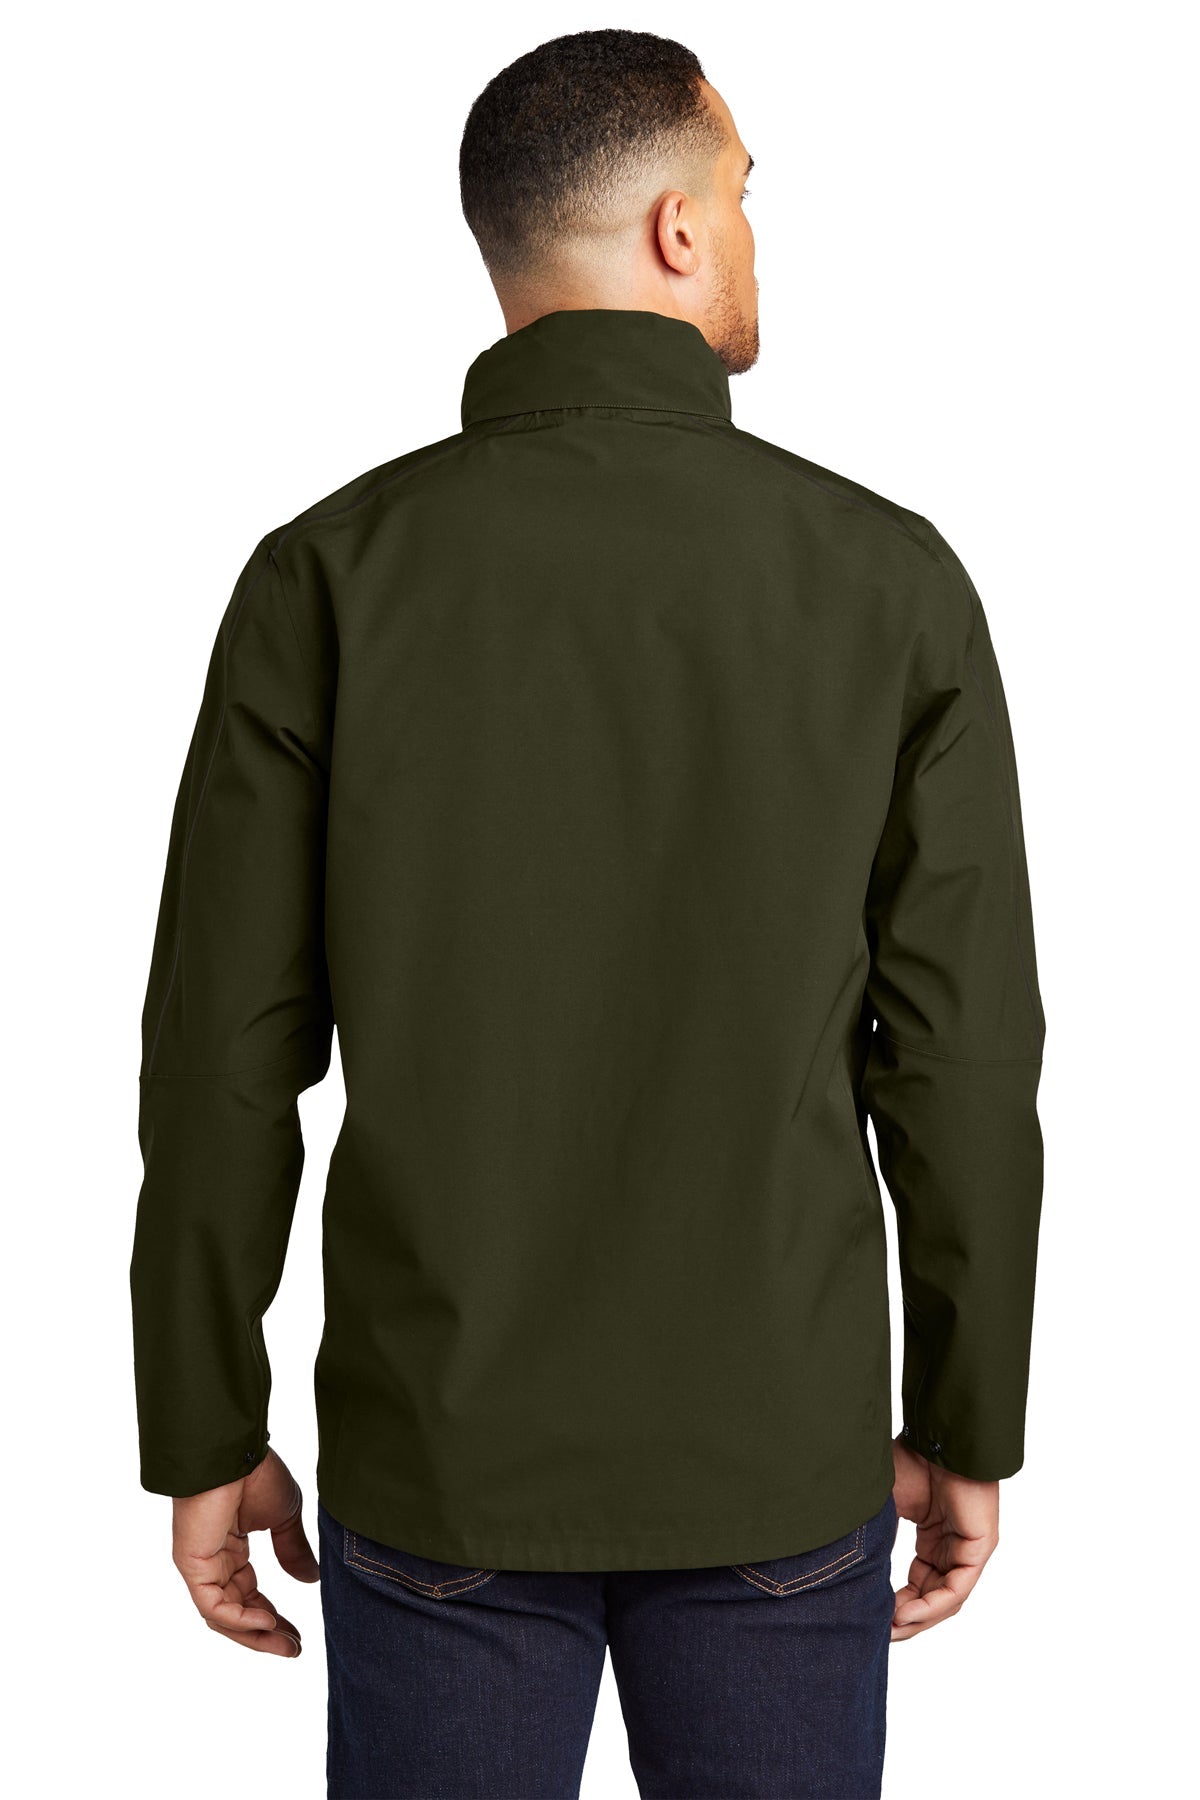 OGIO Utilitarian Custom Jackets, Drive Green